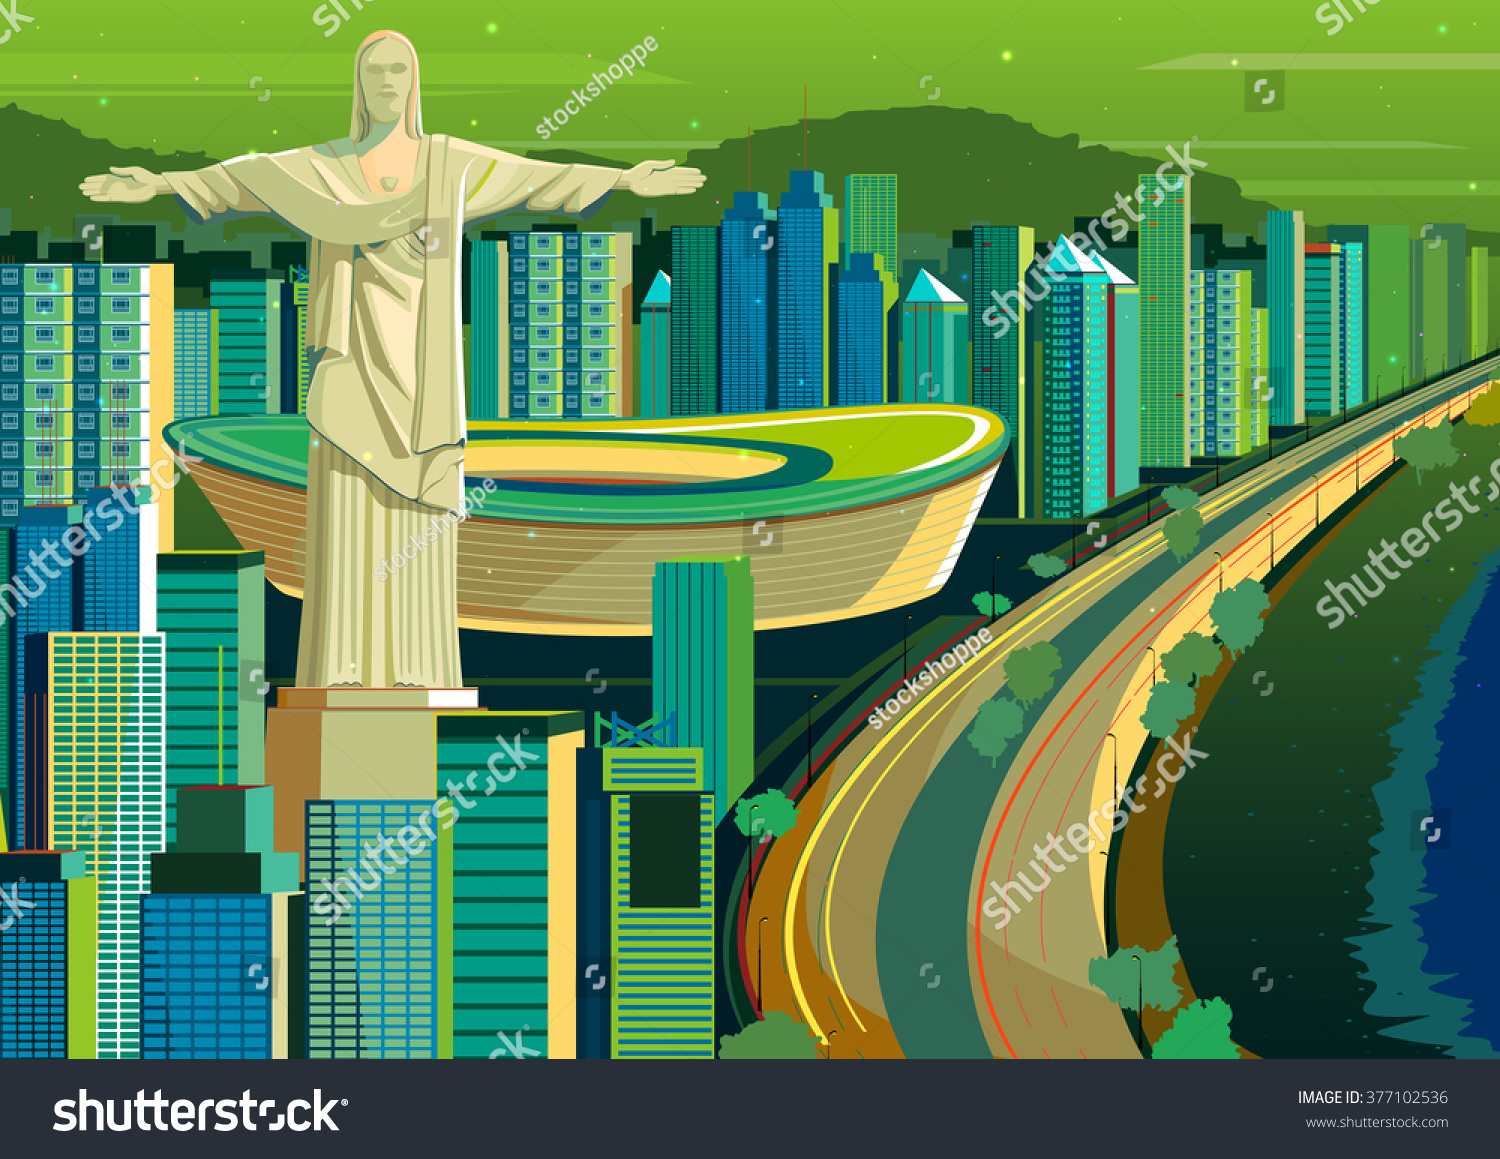 SVG of vector illustration of Christ the Redeemer statue in Brazil svg